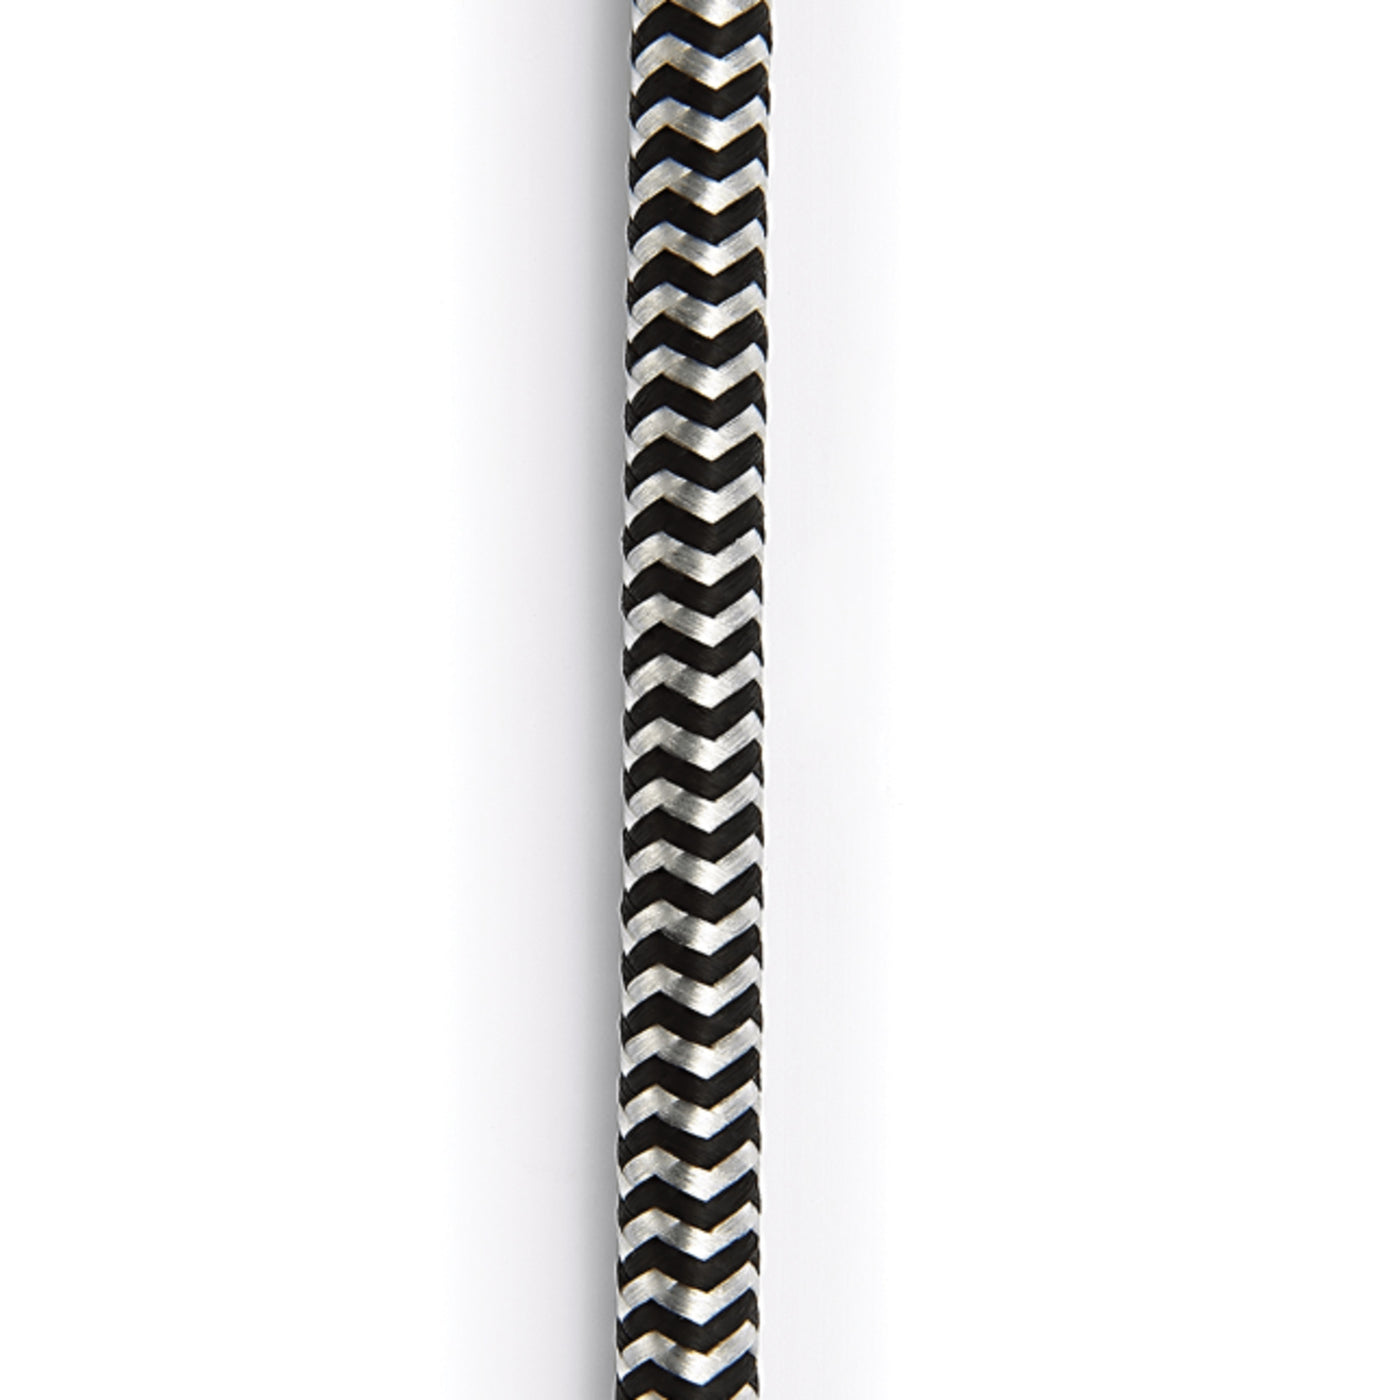 D'Addario Custom Series Braided Instrument Cable, Grey, 20' (PW-BG-20BG)